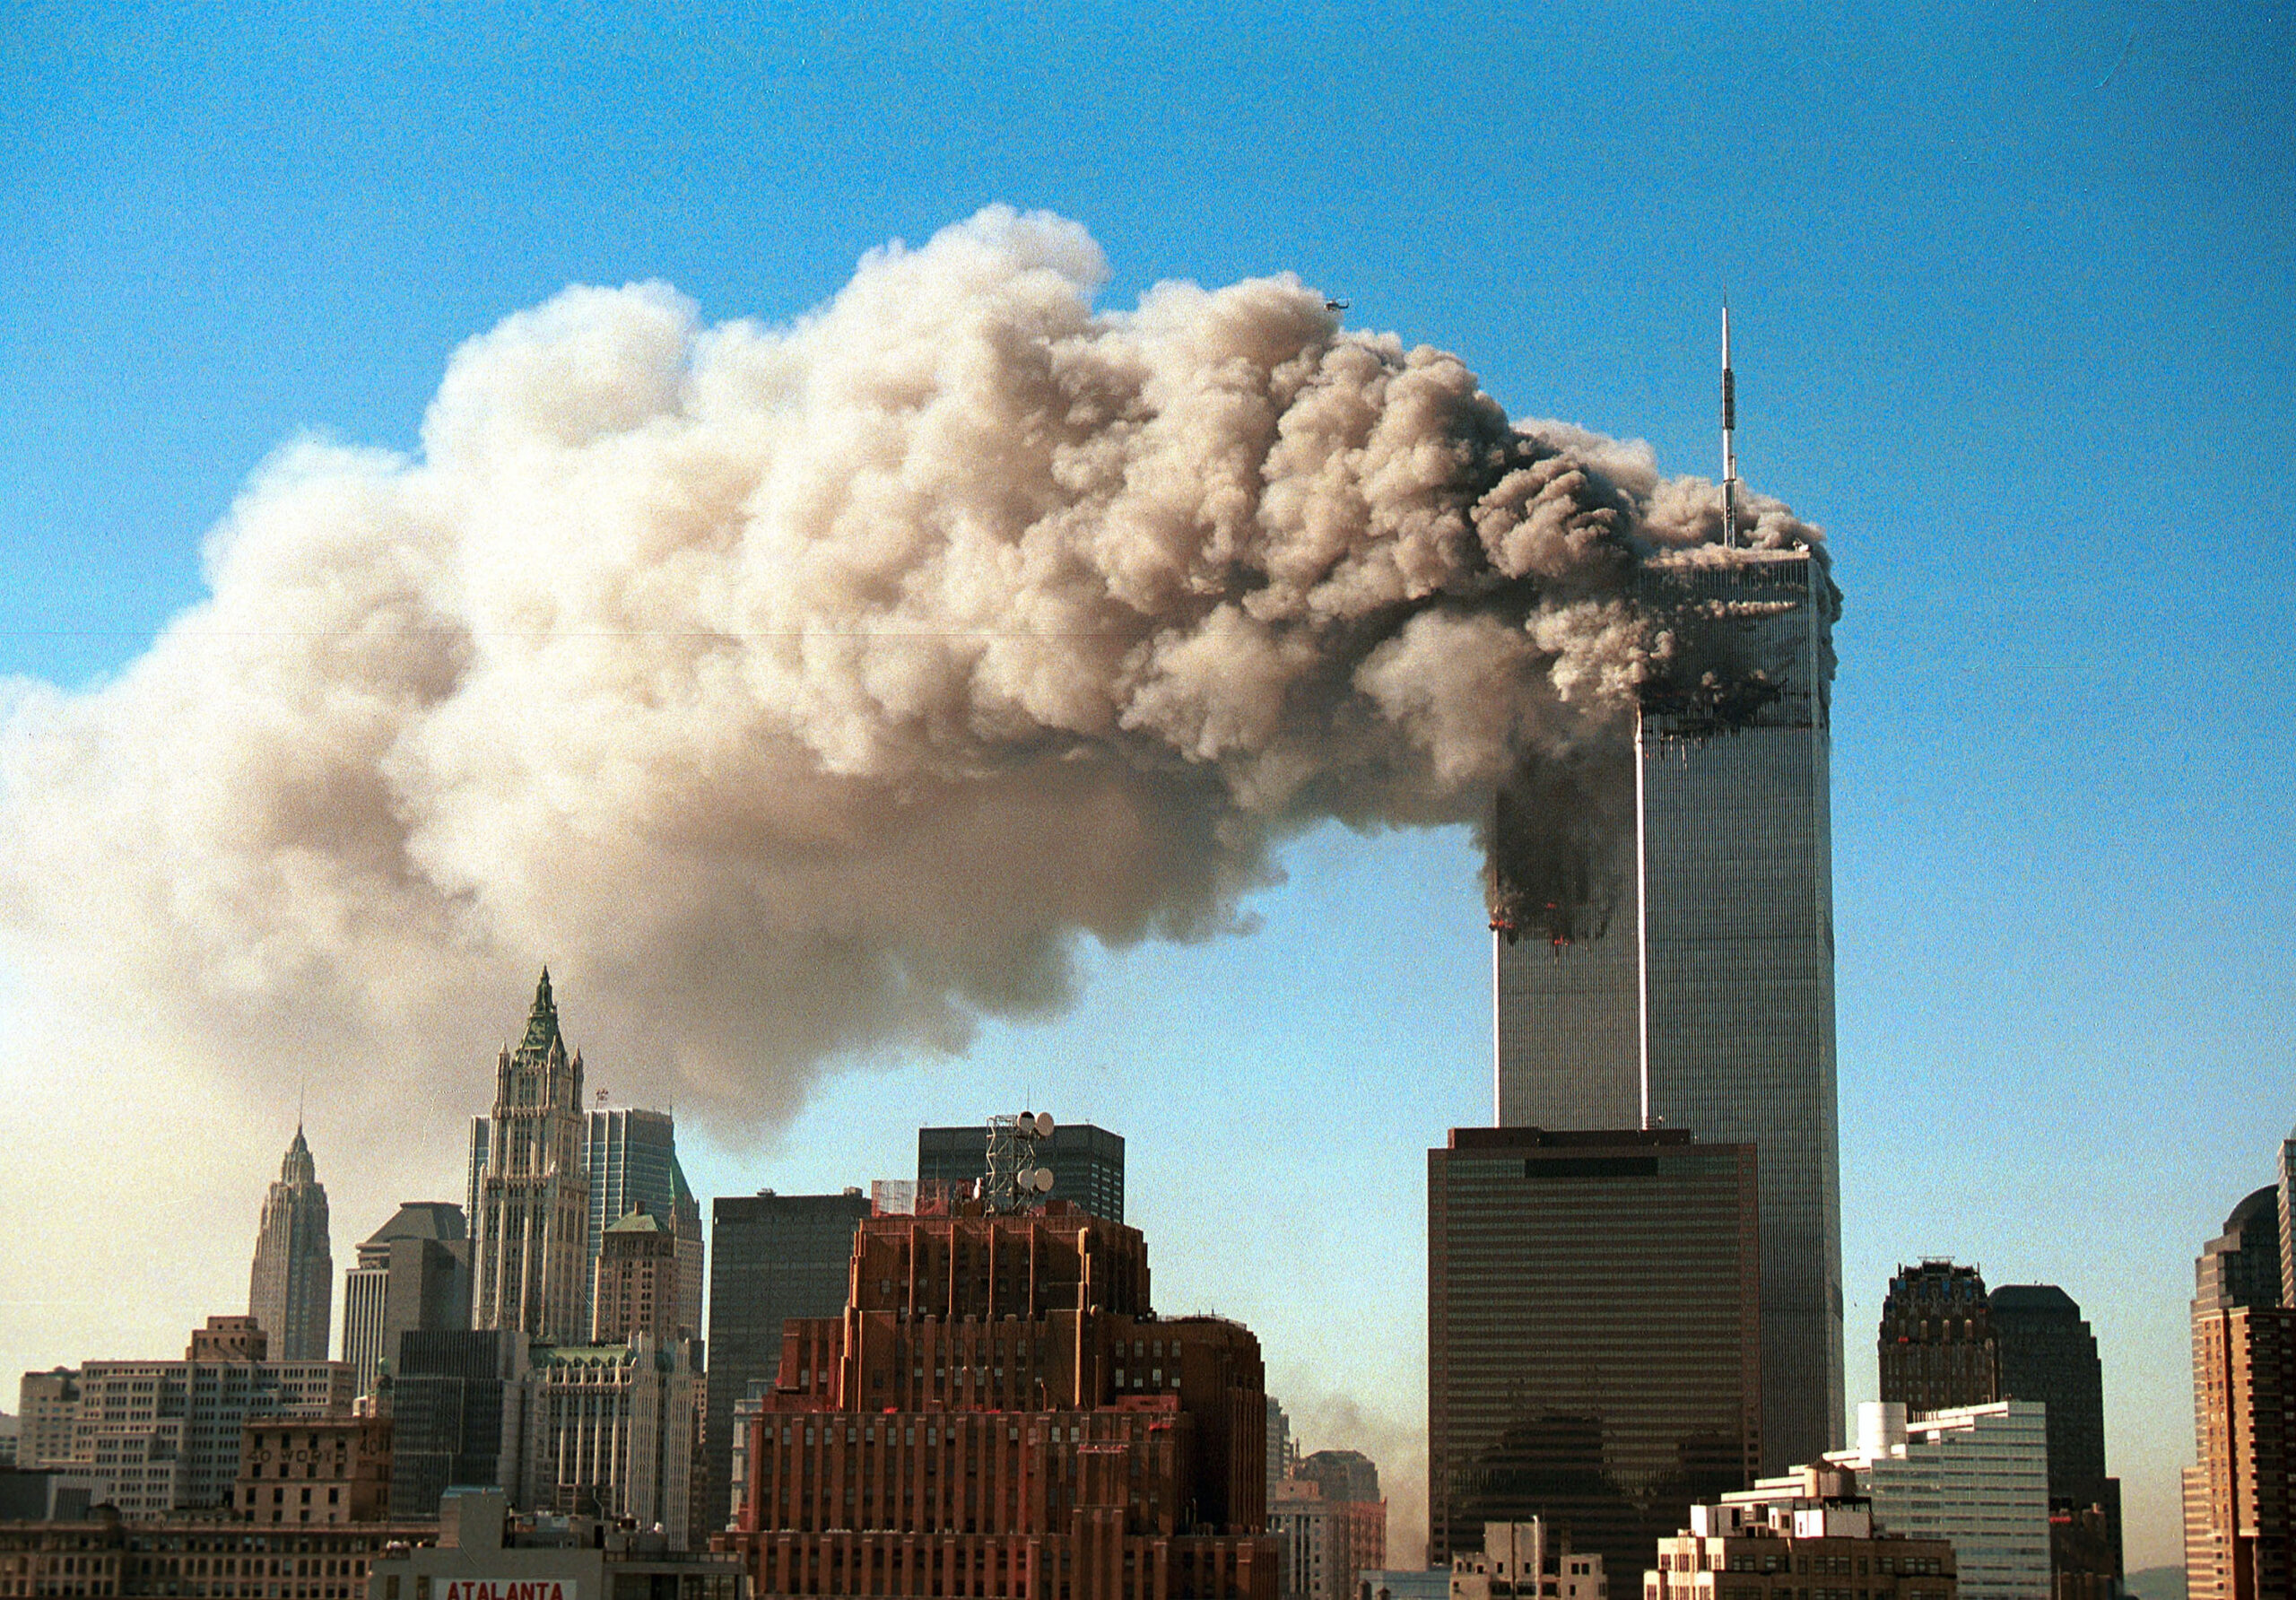 Families have sued Saudi Arabia for 9/11 attacks